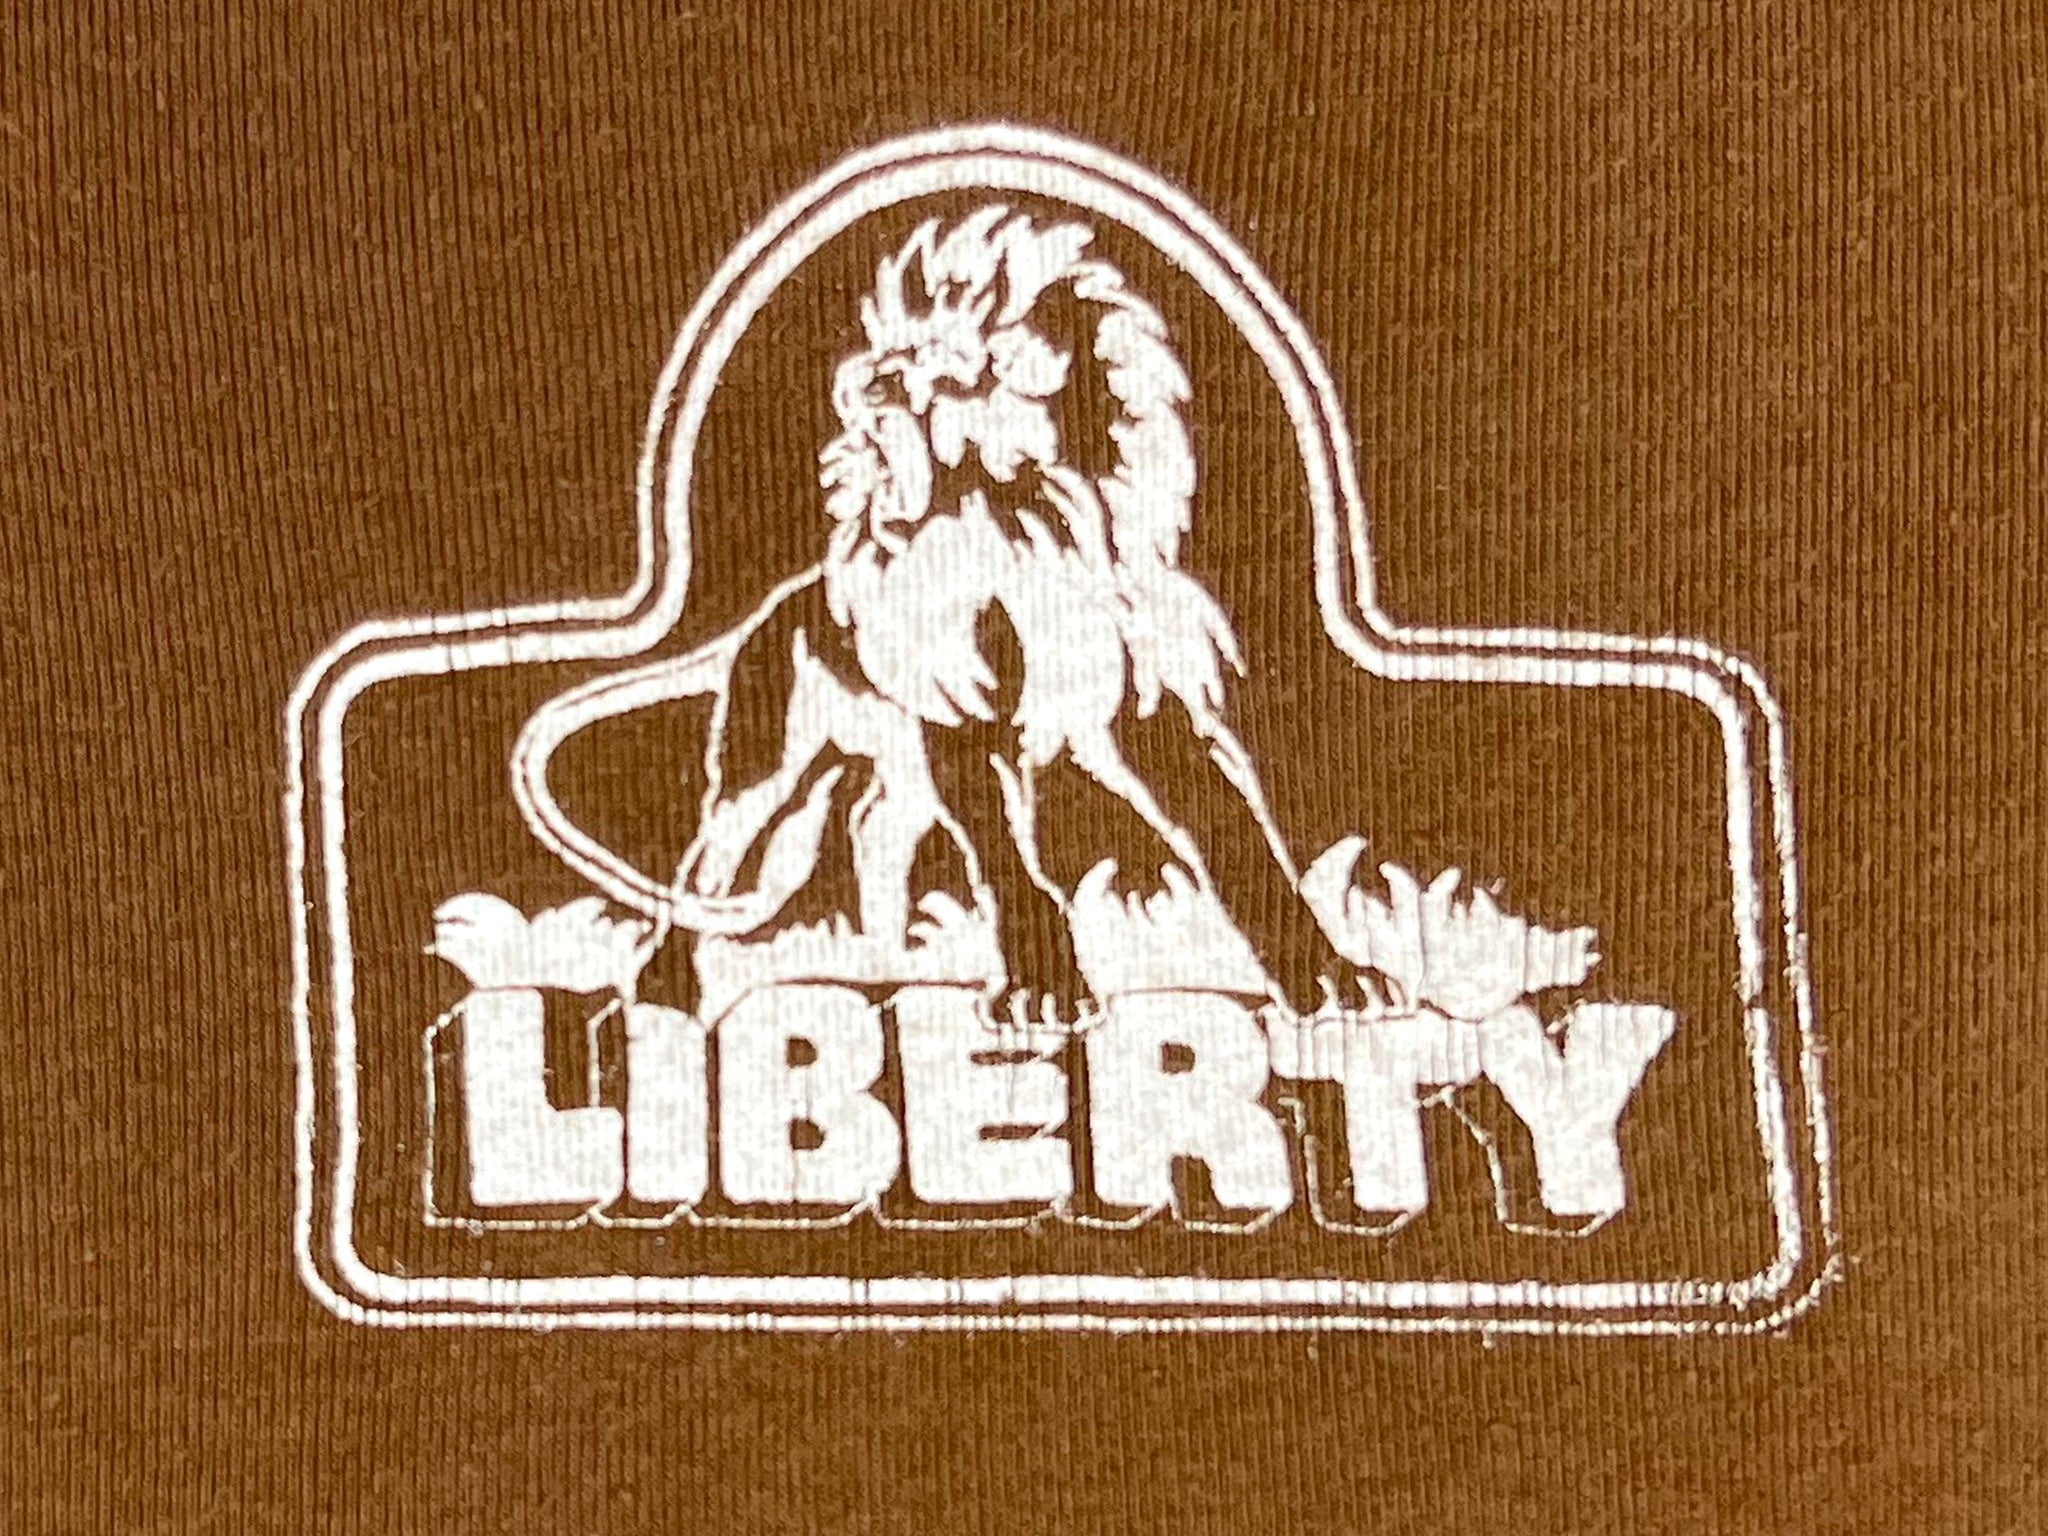 Liberty Lion T-Shirt